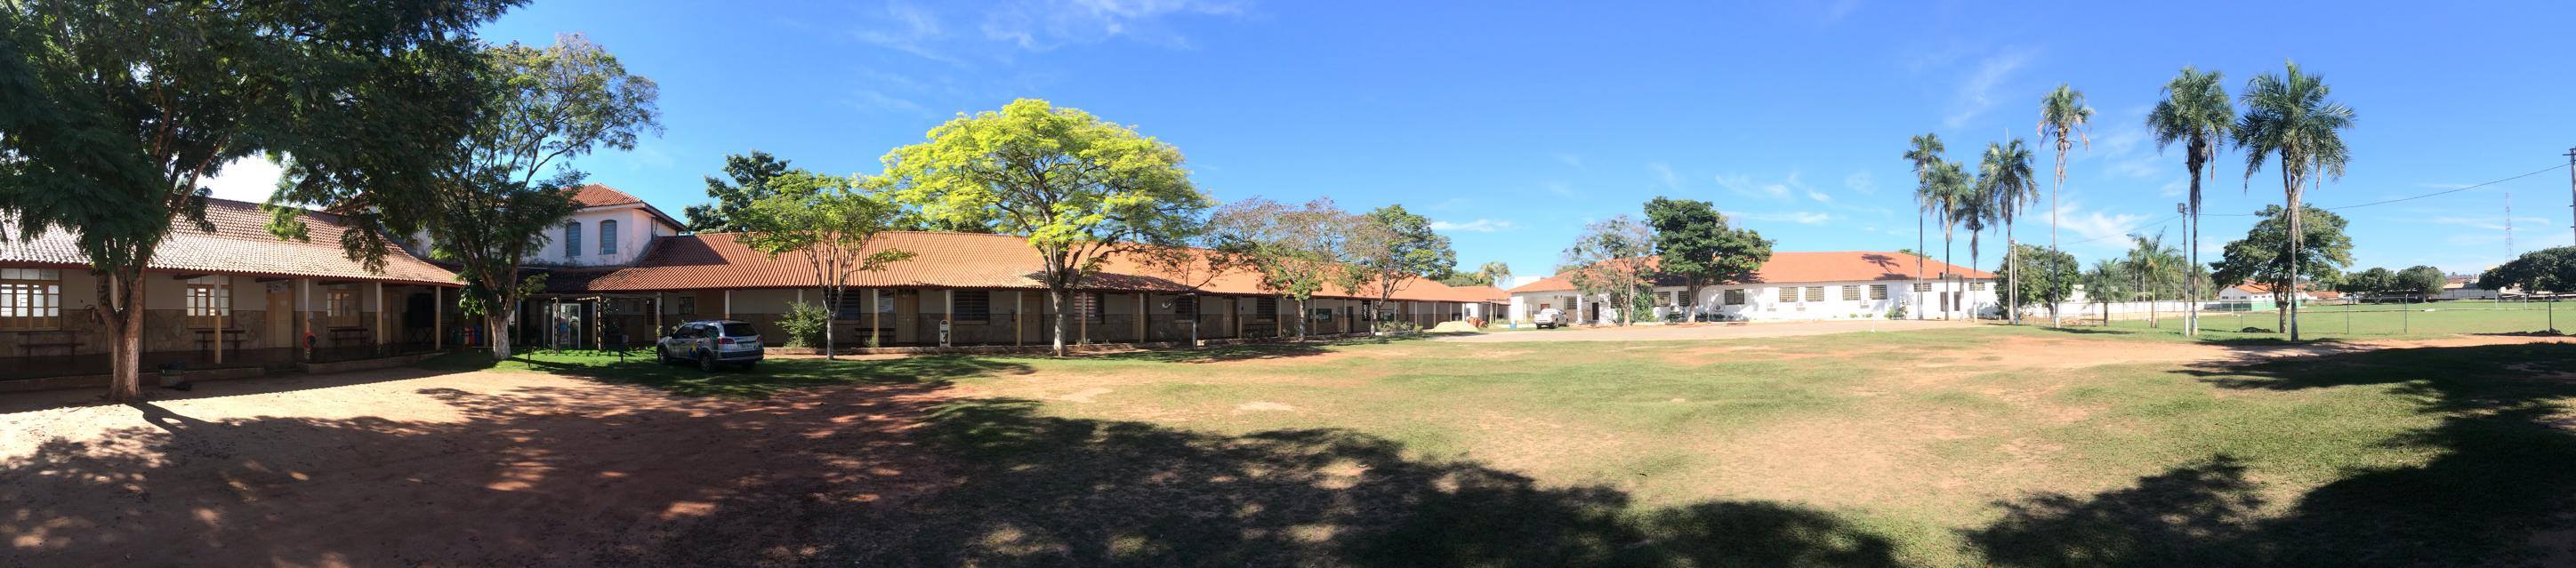 UNEMAT, State University of Mato Grosso, Brazil